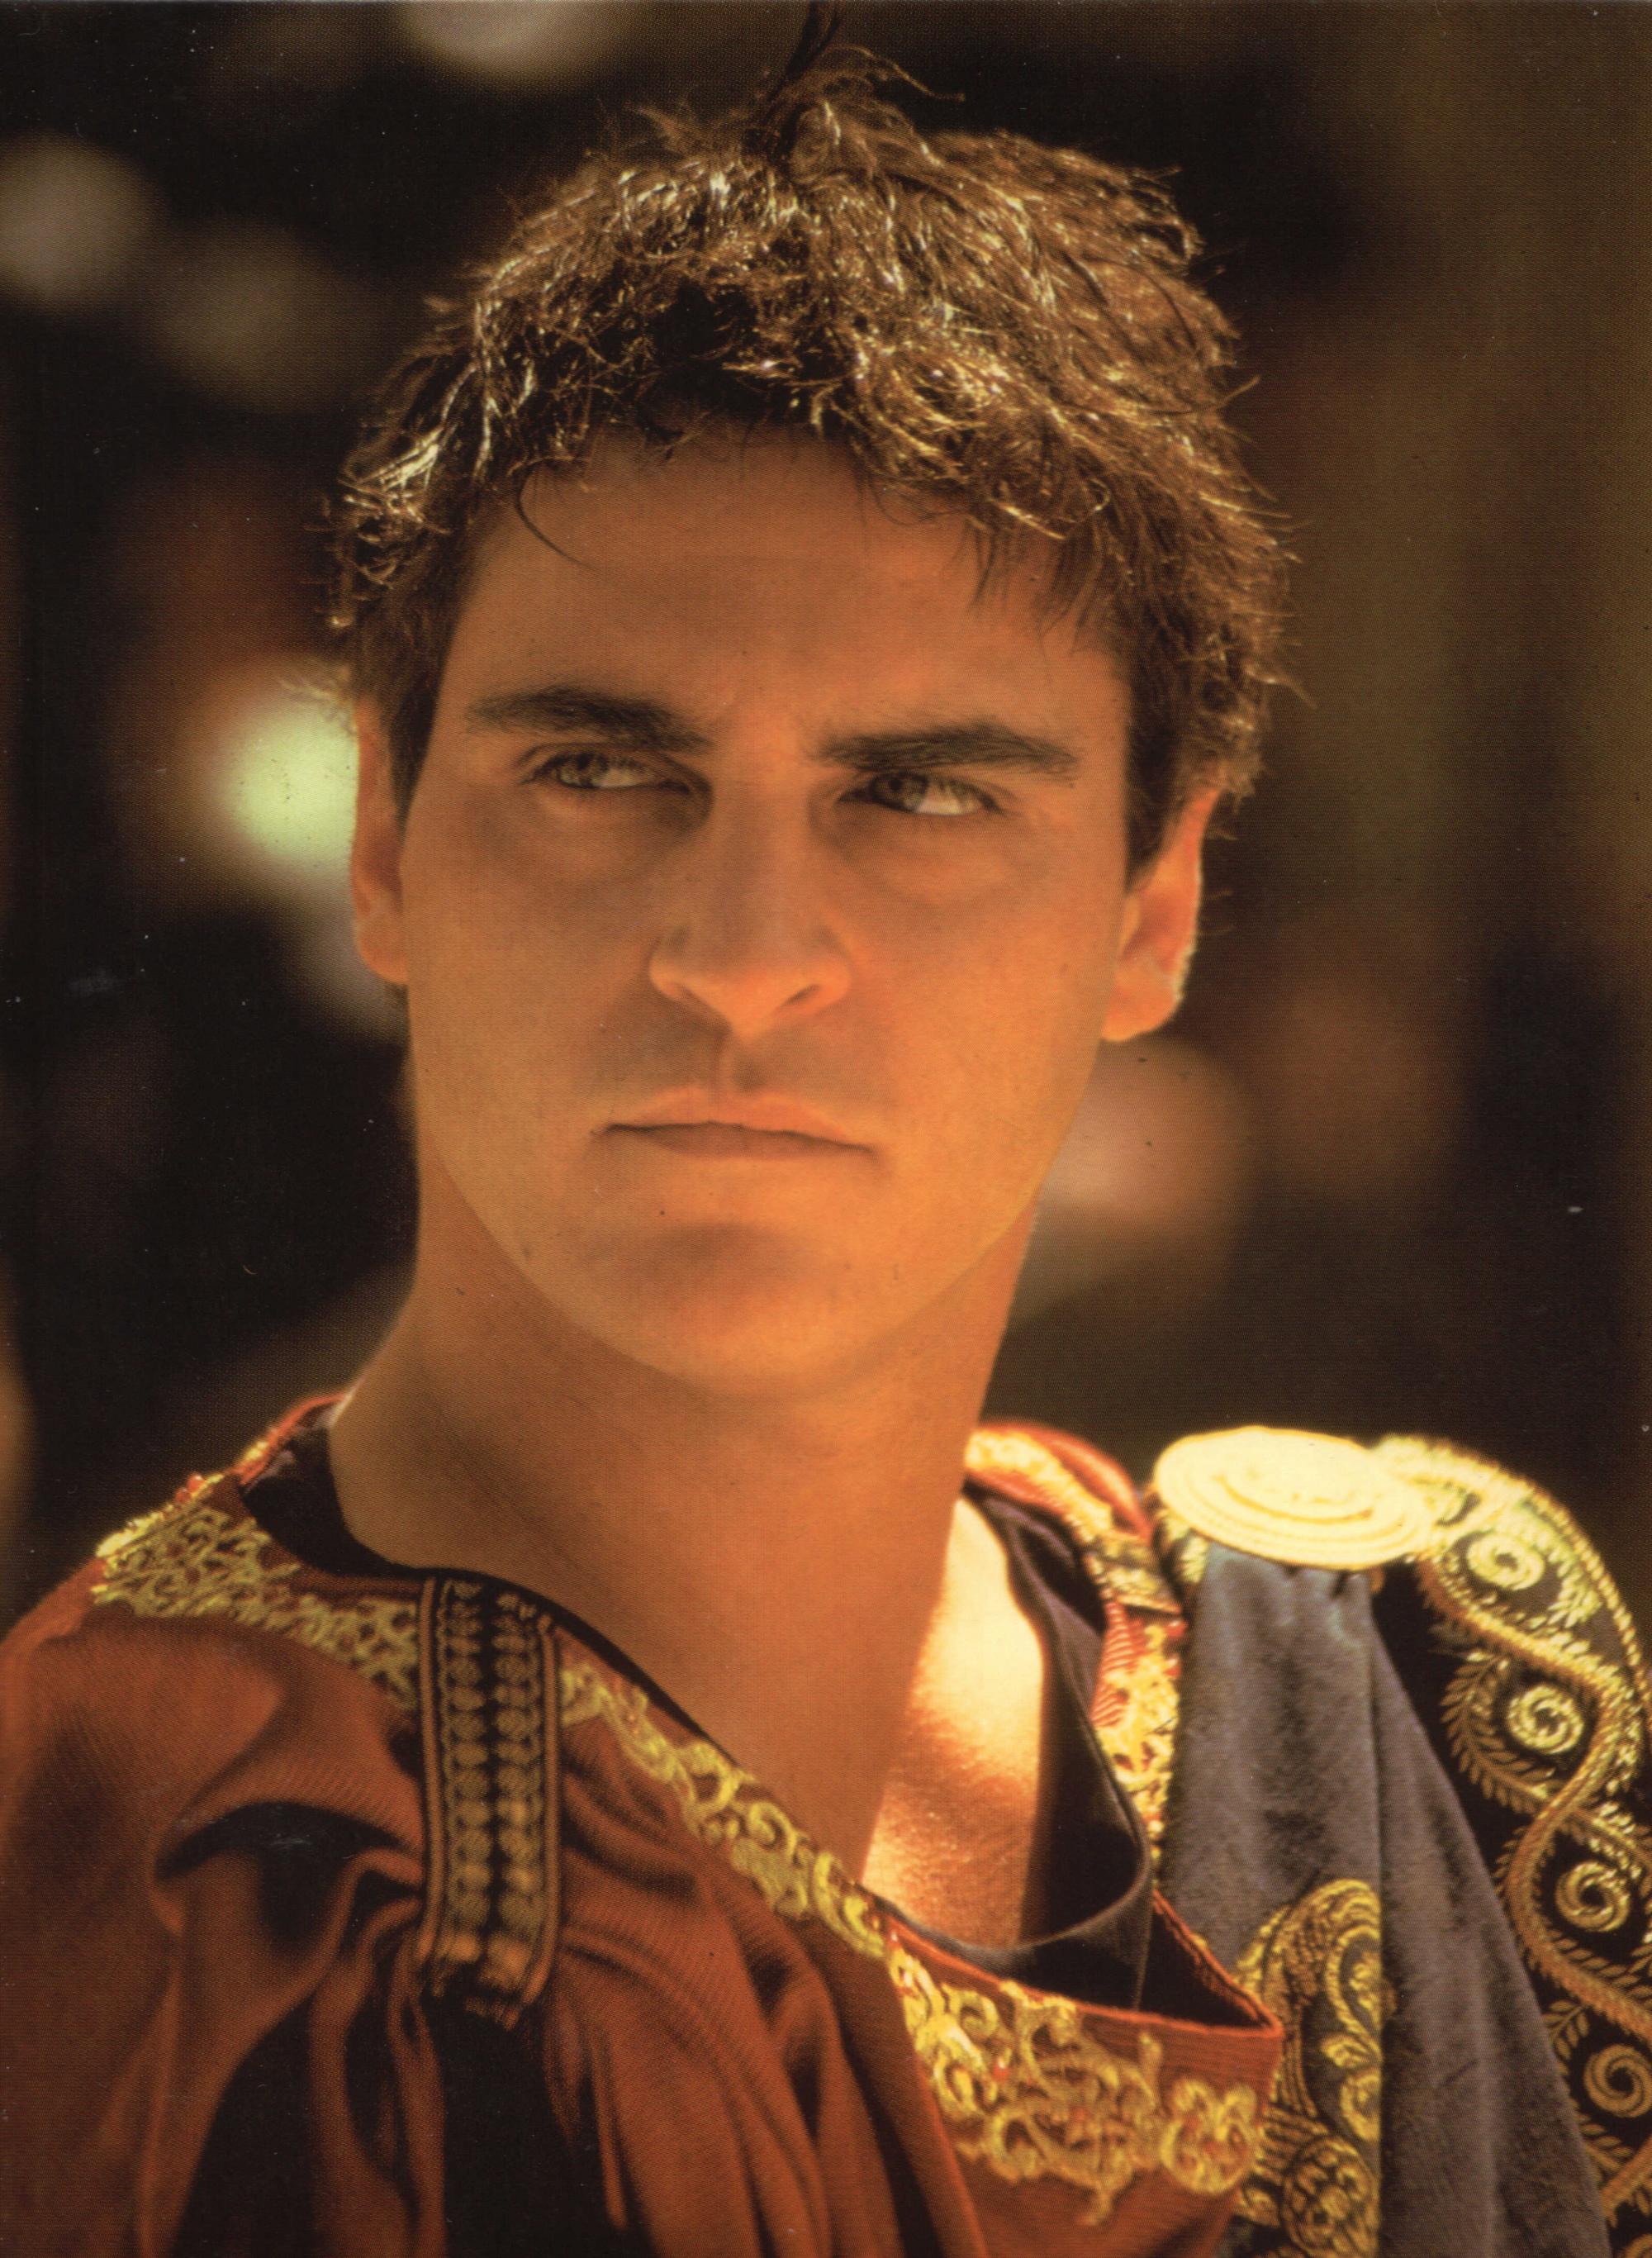 Joaquin-Phoenix-as-Commodus-in-Gladiator-2000-joaquin-phoenix-40695853-2000-2733.jpg